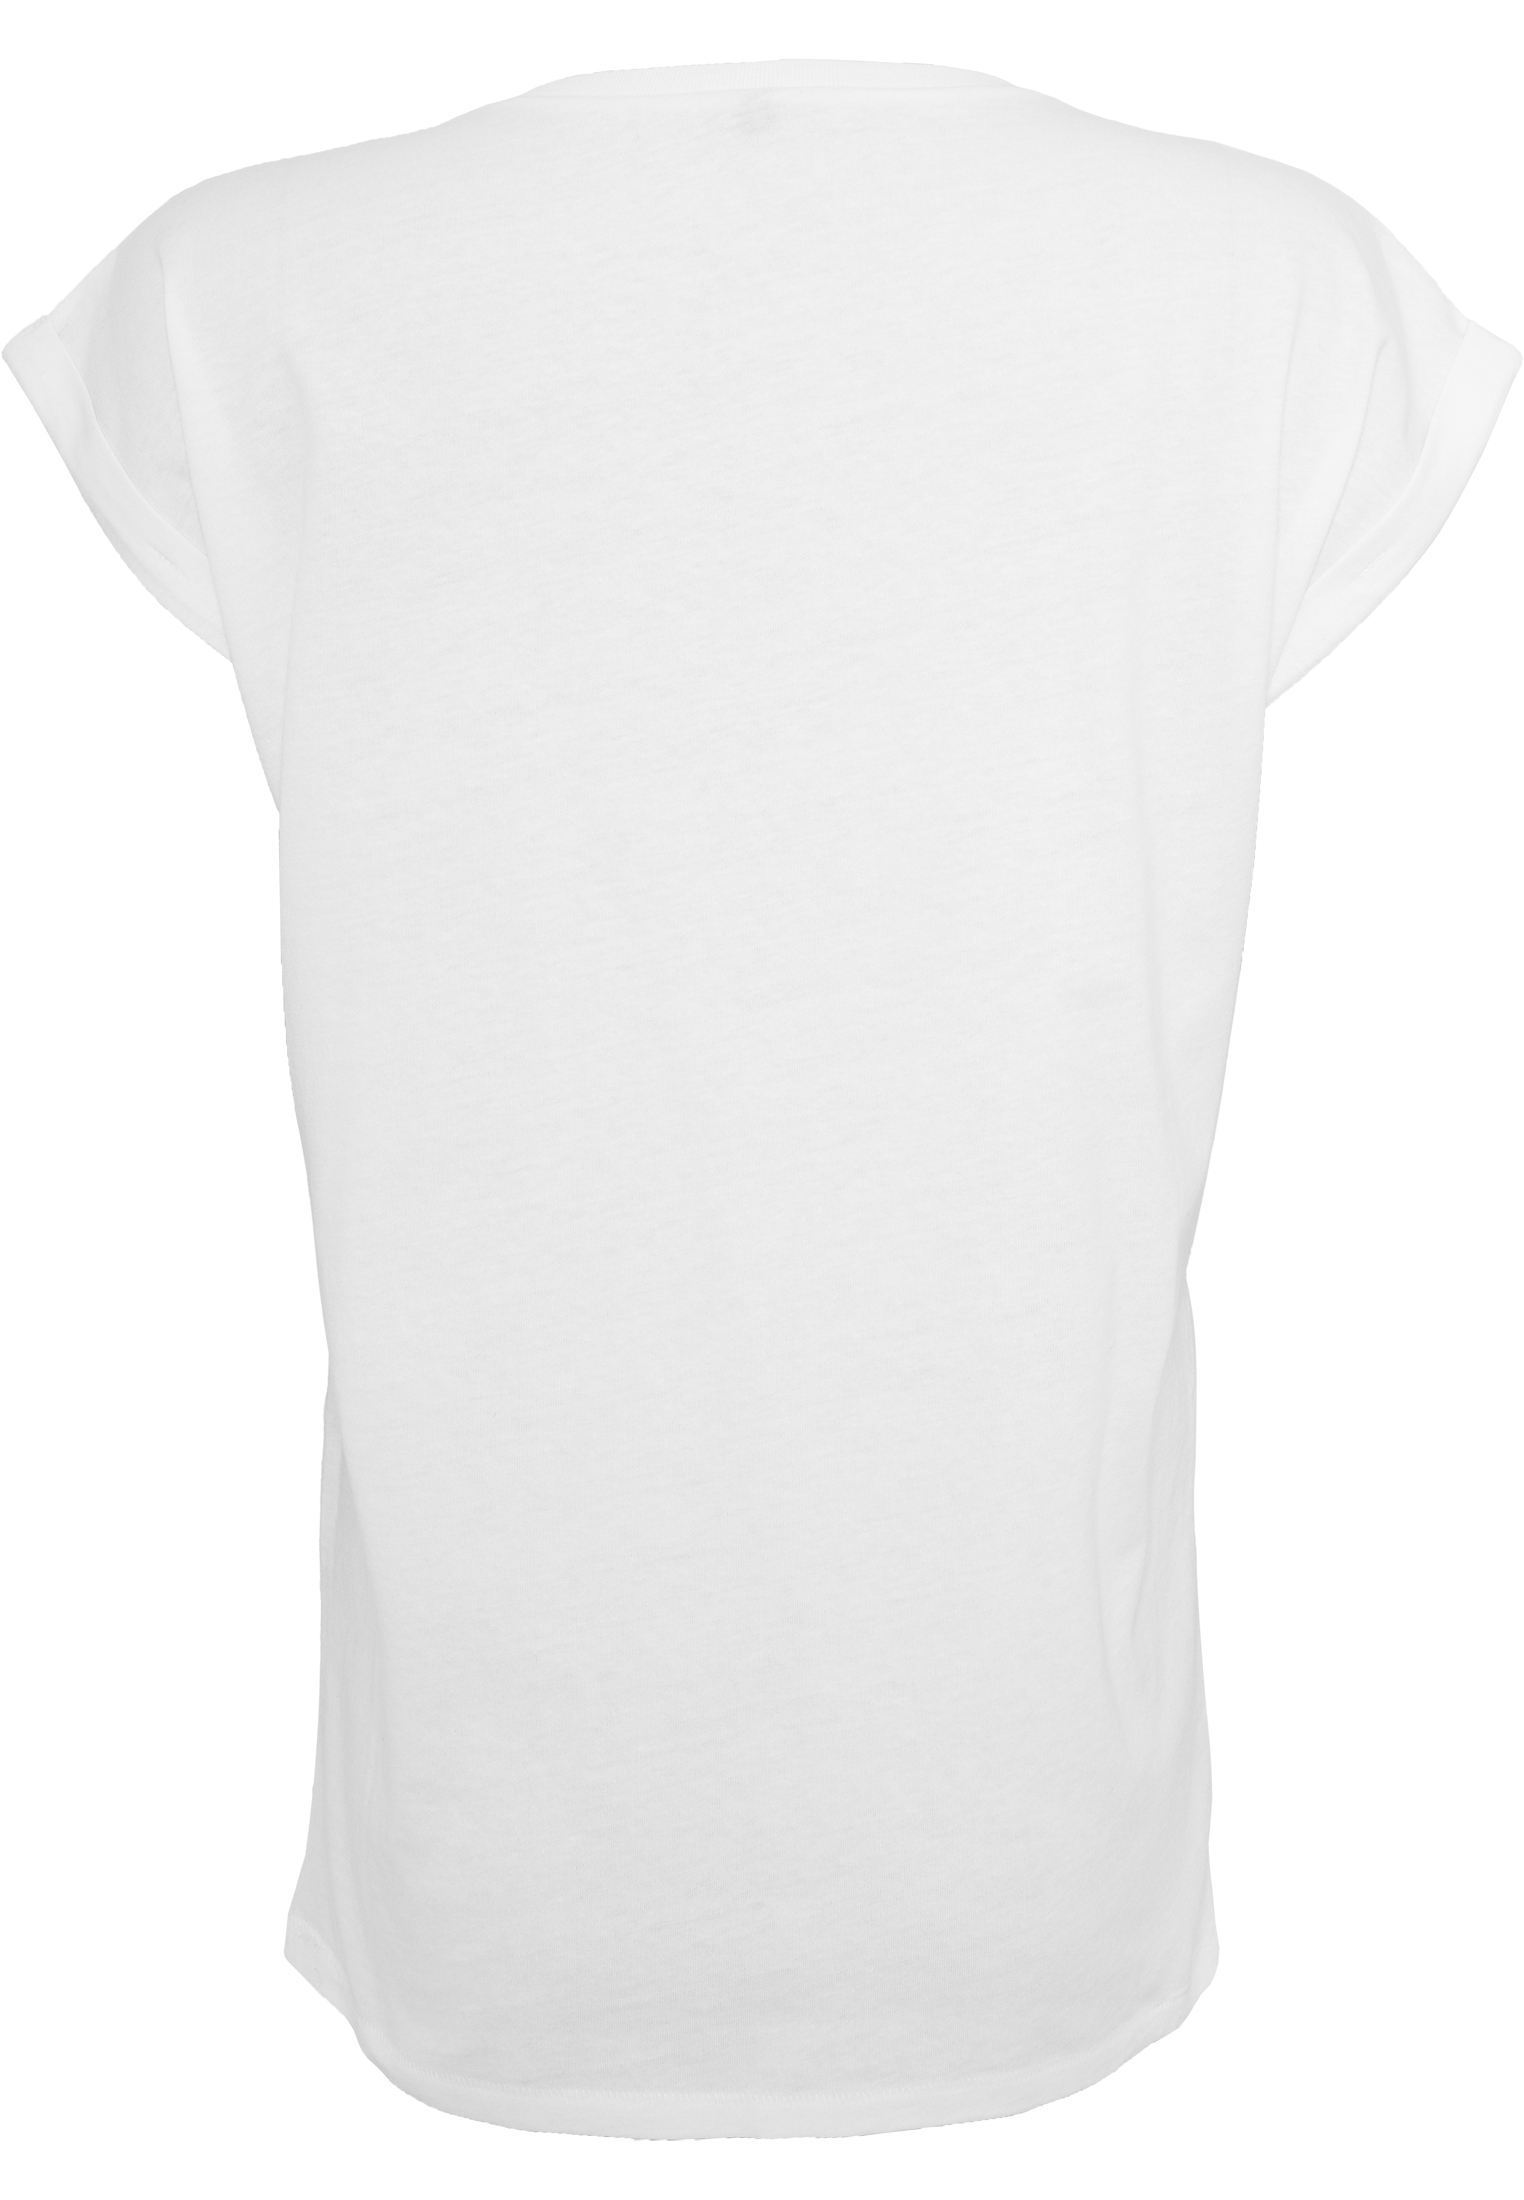 T-Shirts Ladies Coca Cola Round Logo Tee in Farbe white